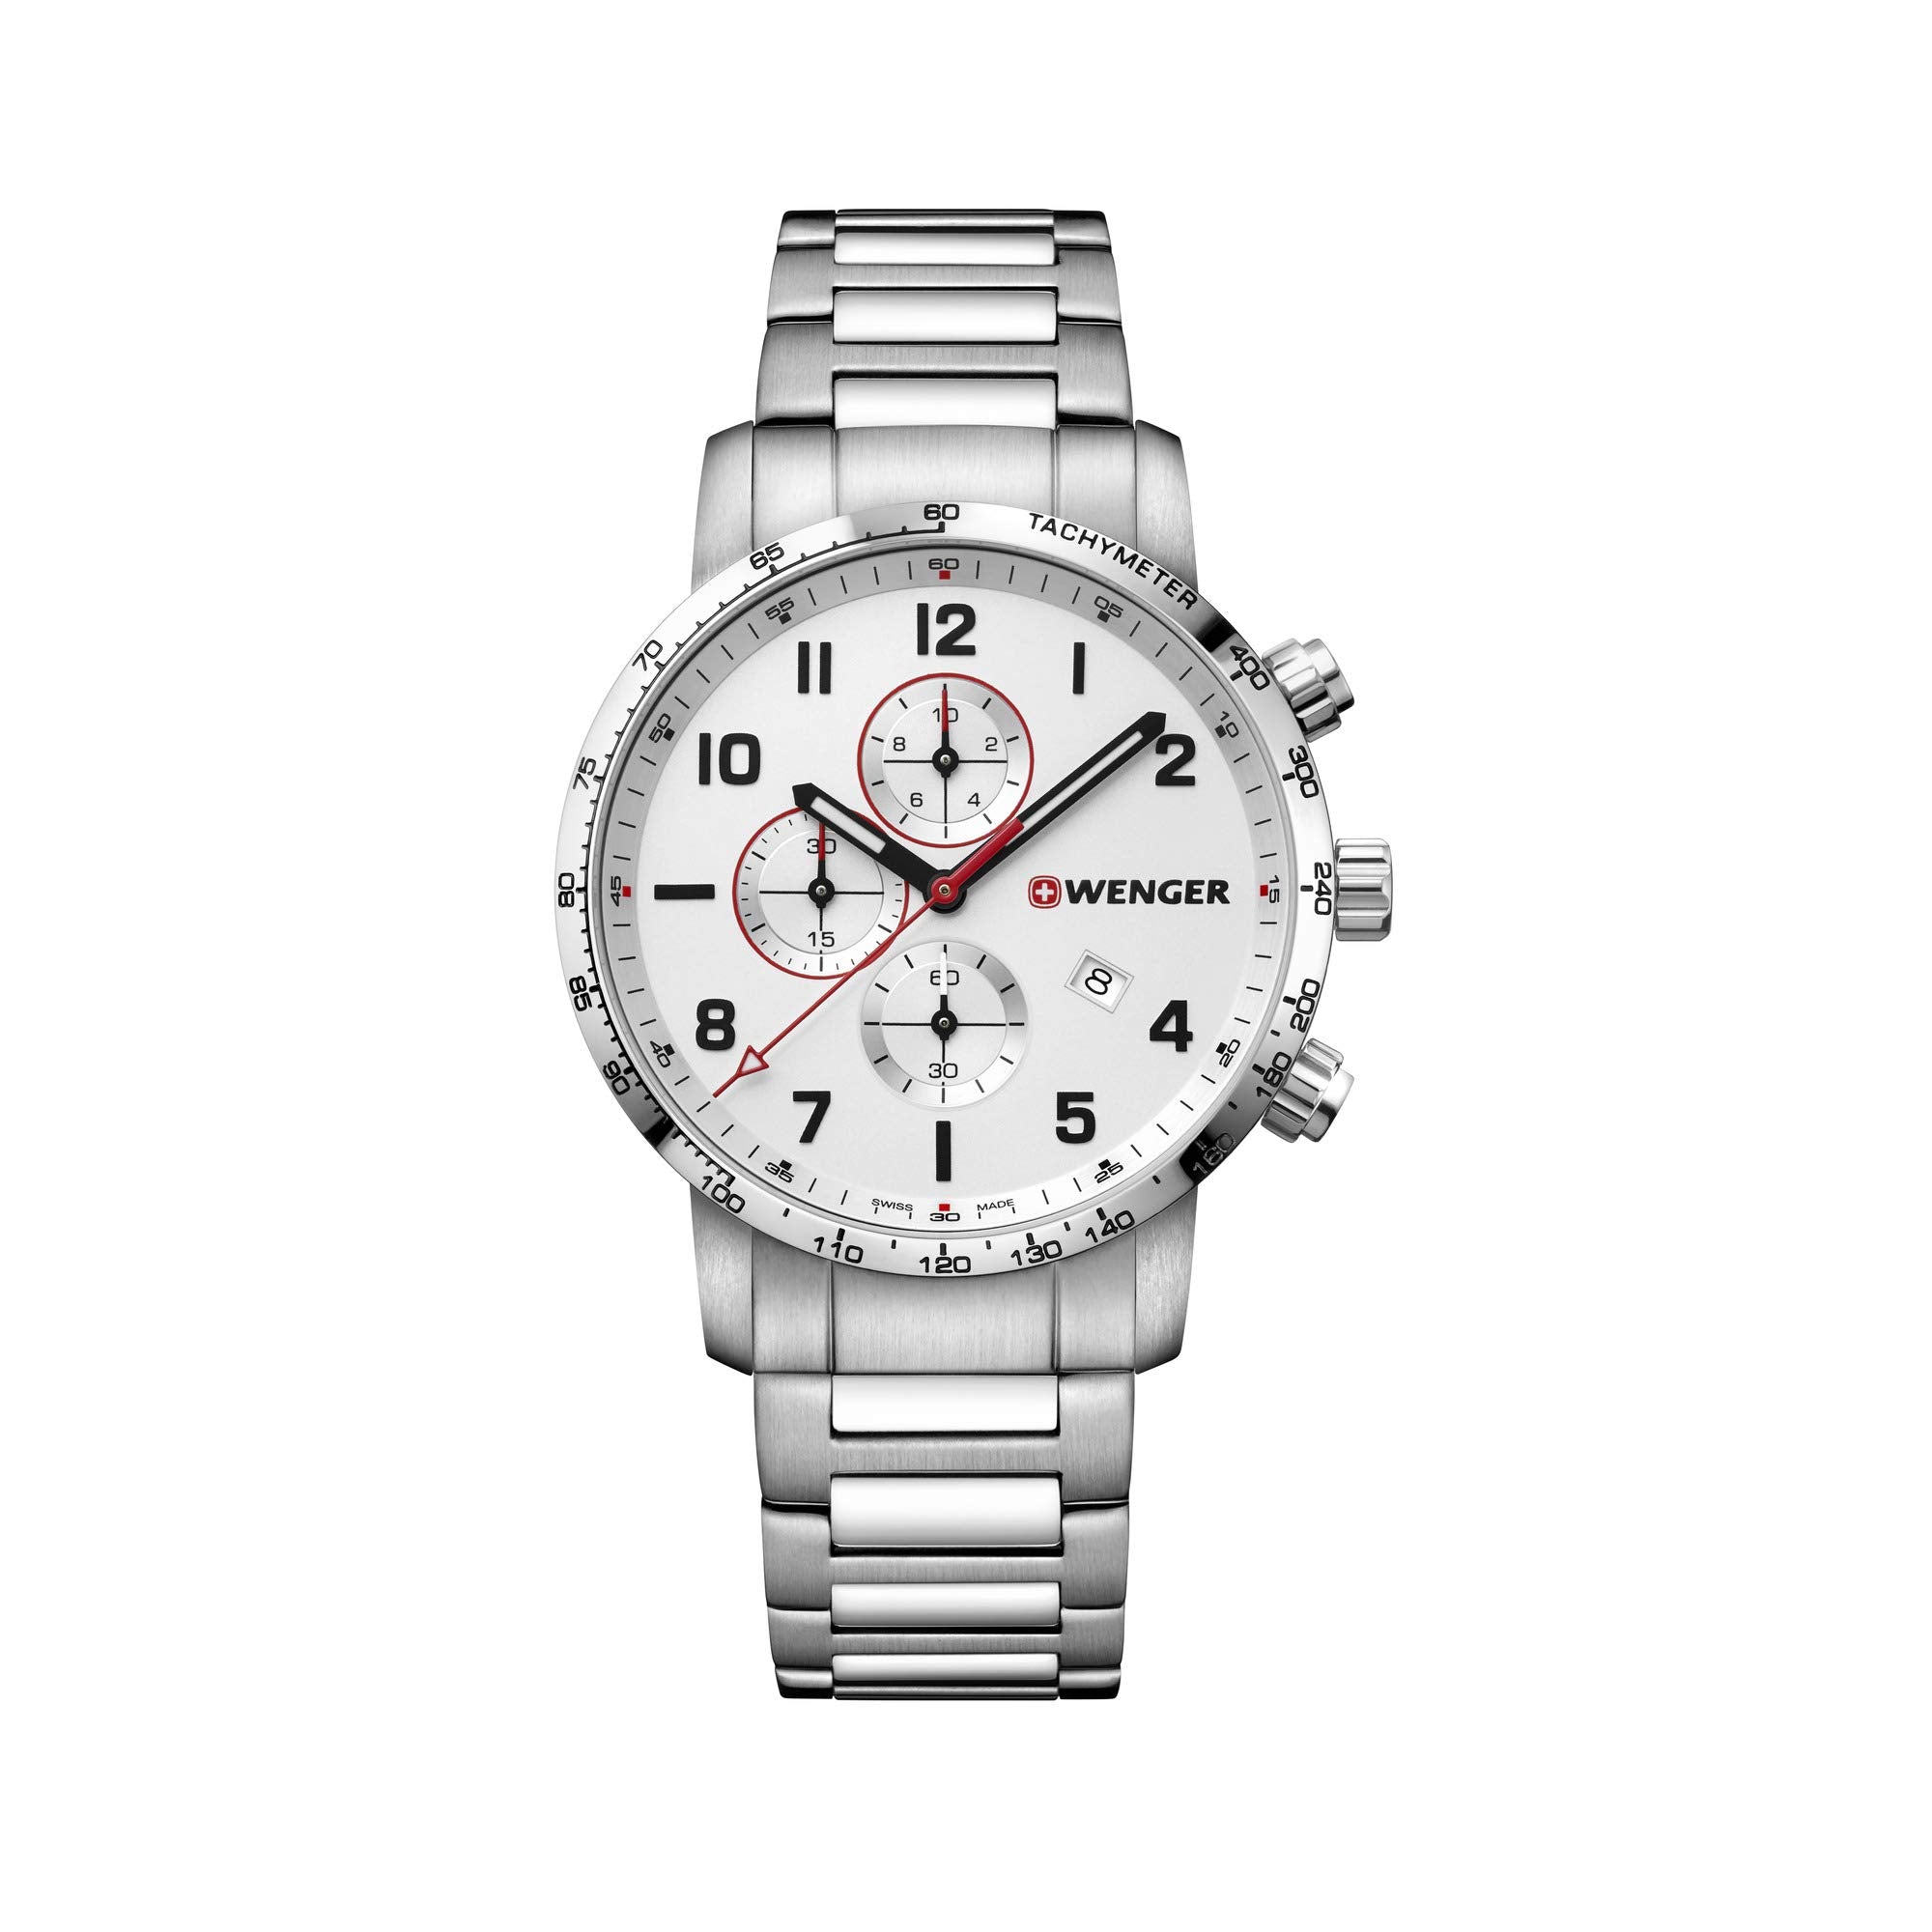 Wenger Men's Attitude Chronograph - Swiss Made Analogue Quartz Stainless Steel Watch 01.1543.110